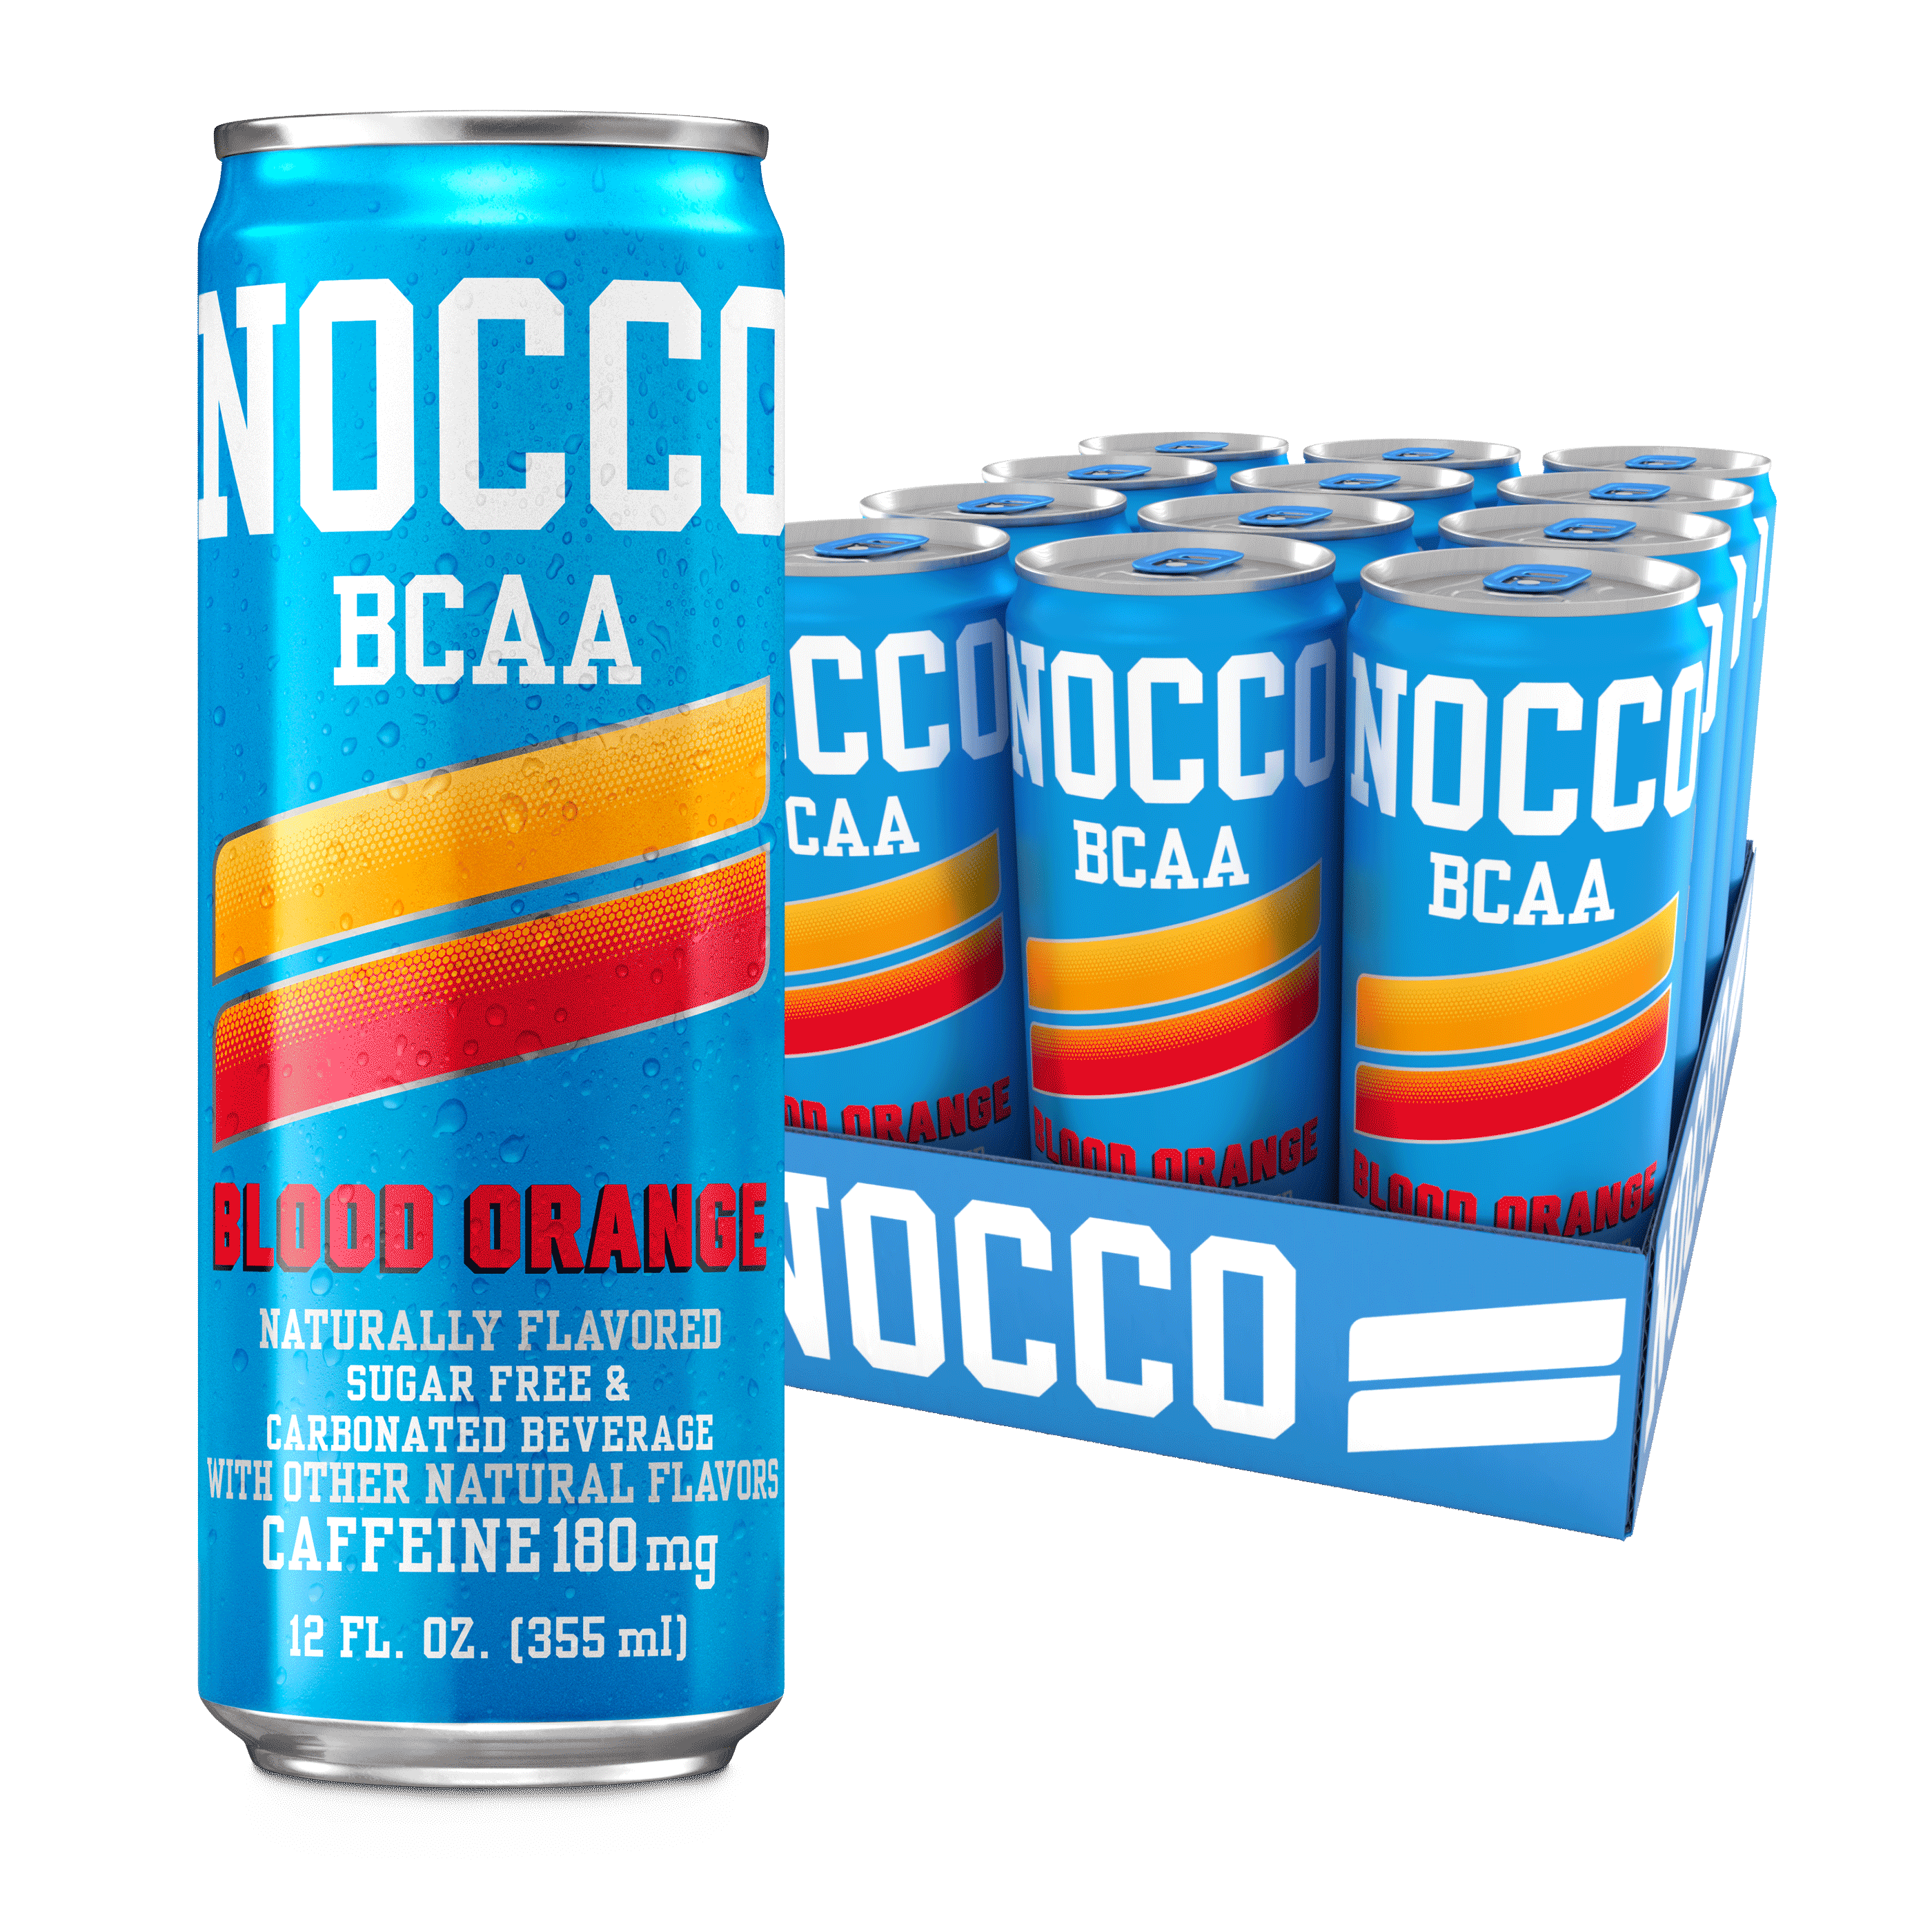 Blood Orange Nocco 12-pack product image